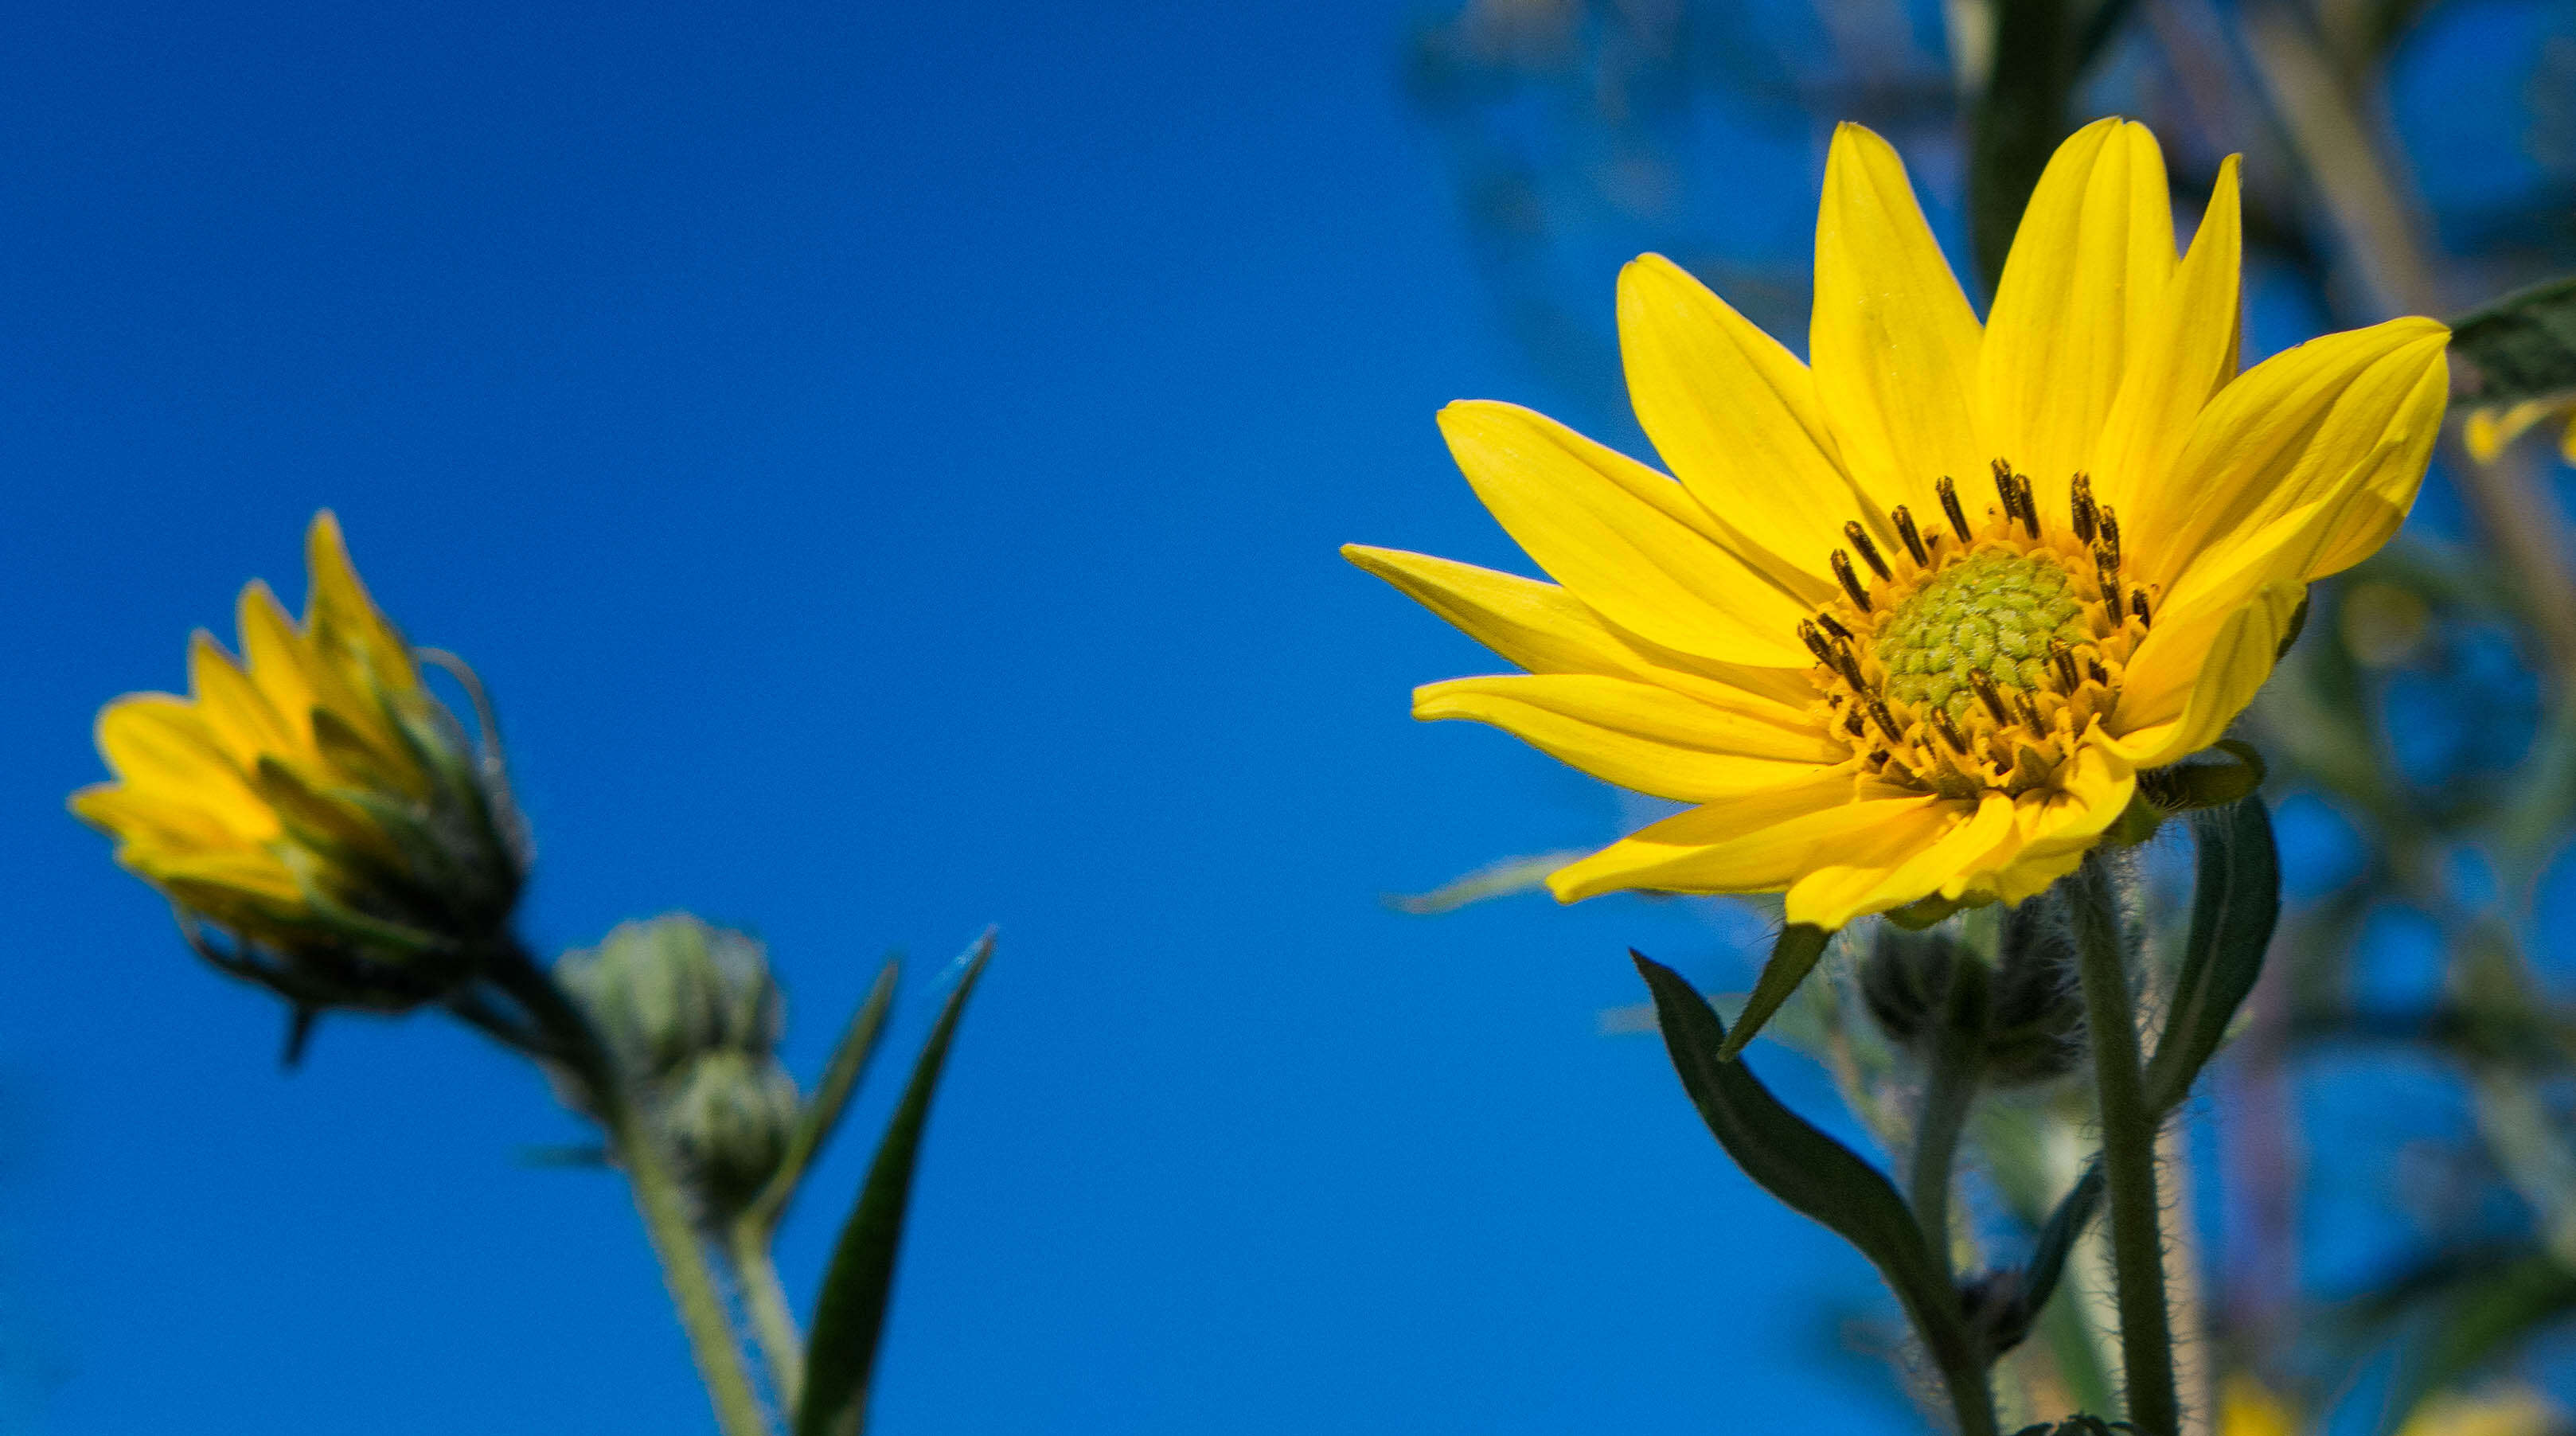 Image of giant sunflower